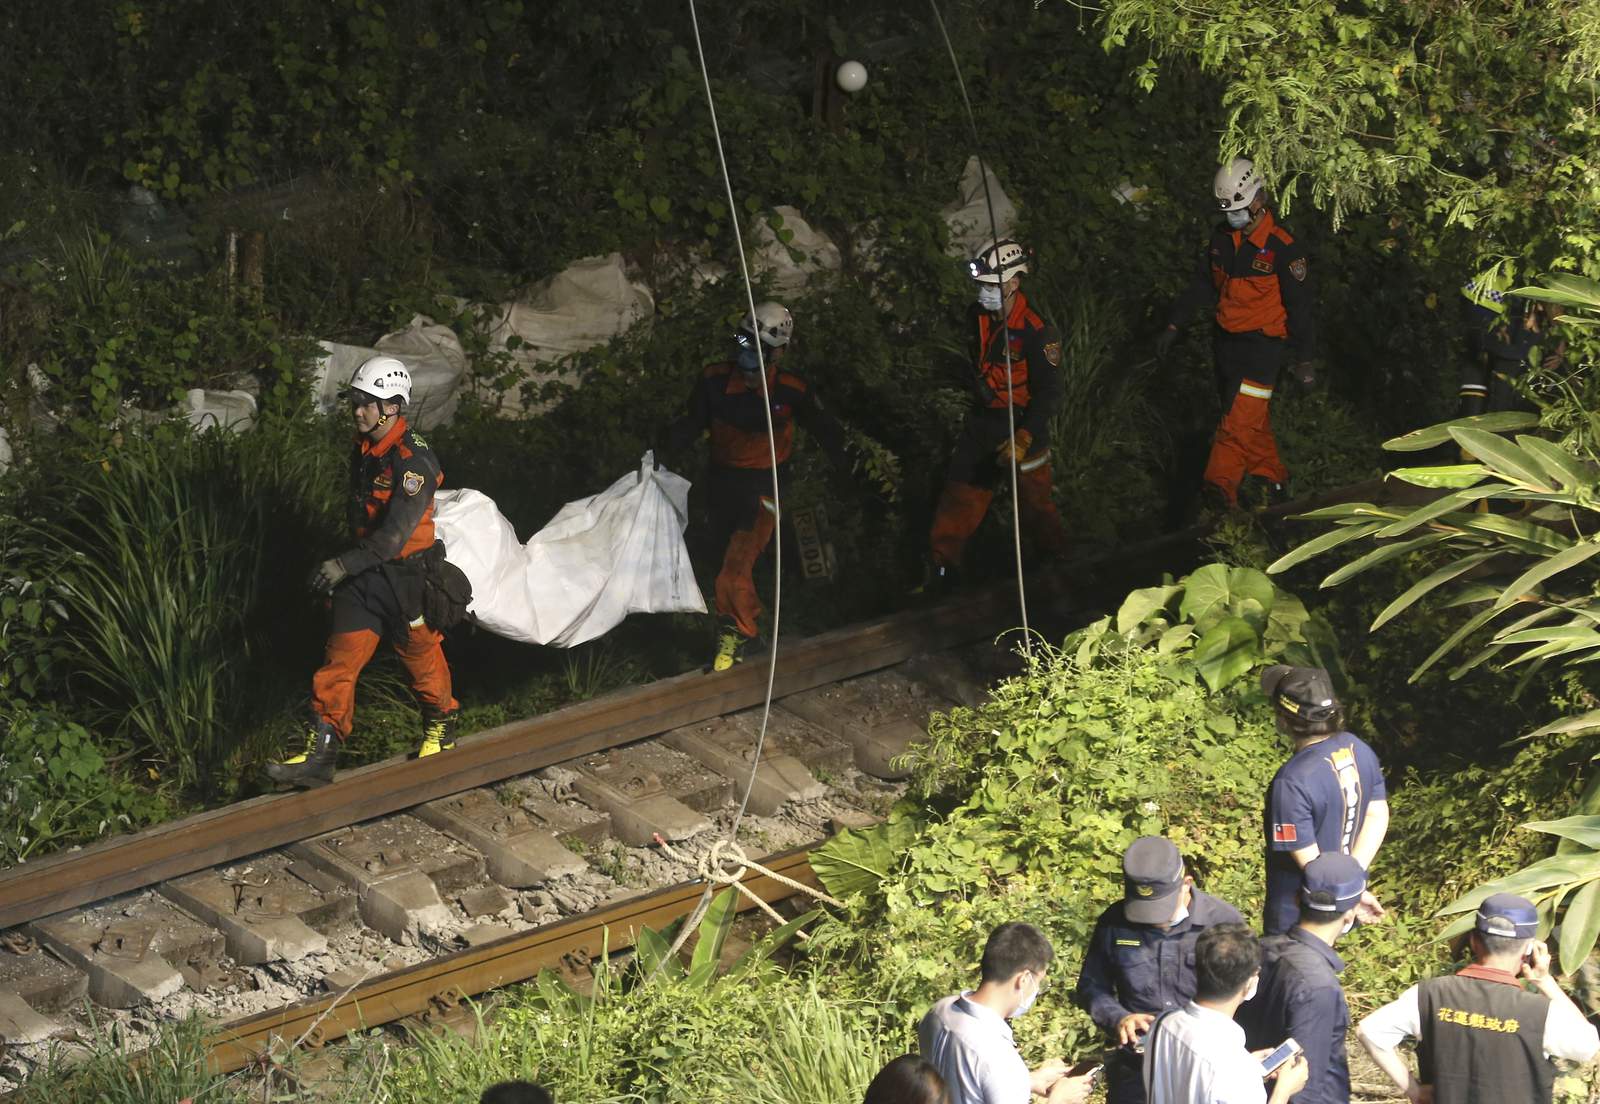 Train hits truck that slid onto track in Taiwan, killing 51